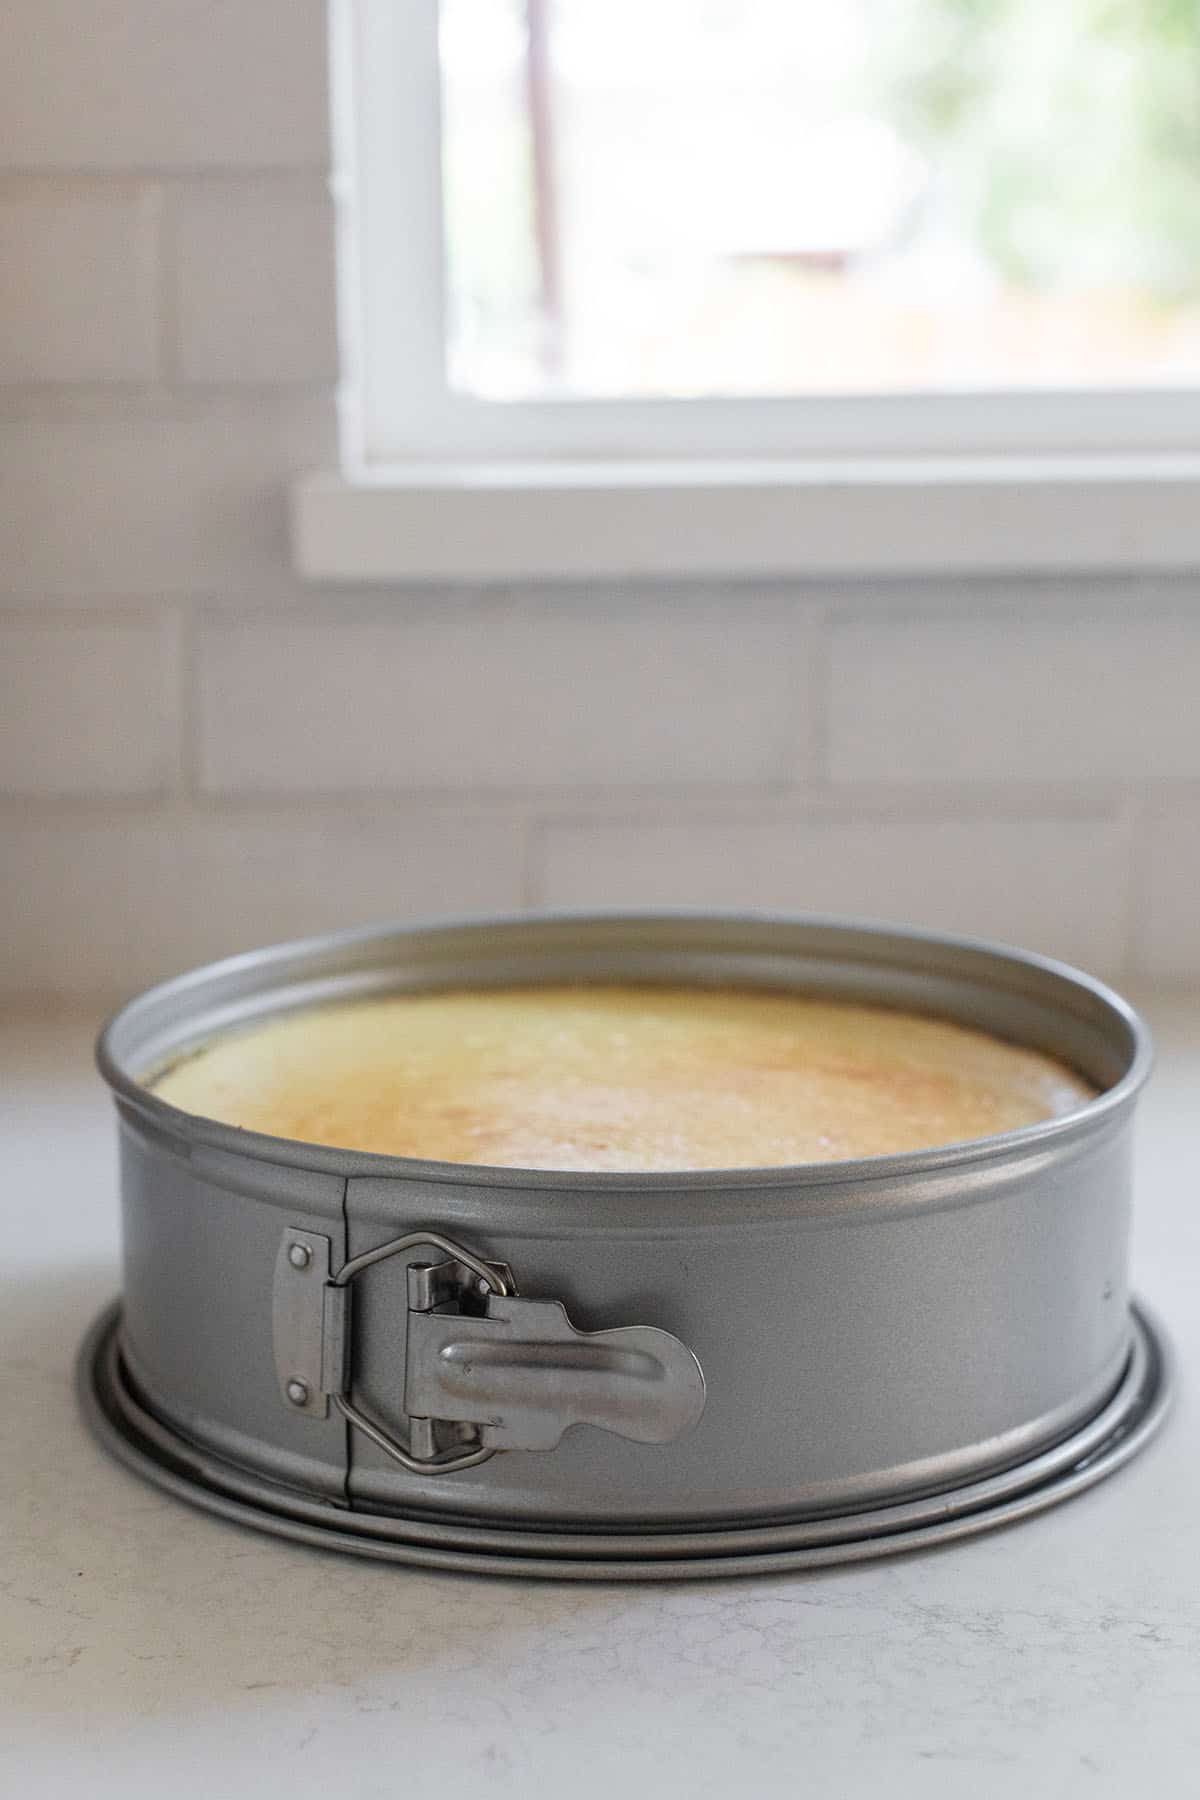 Cheesecake in a springform pan.